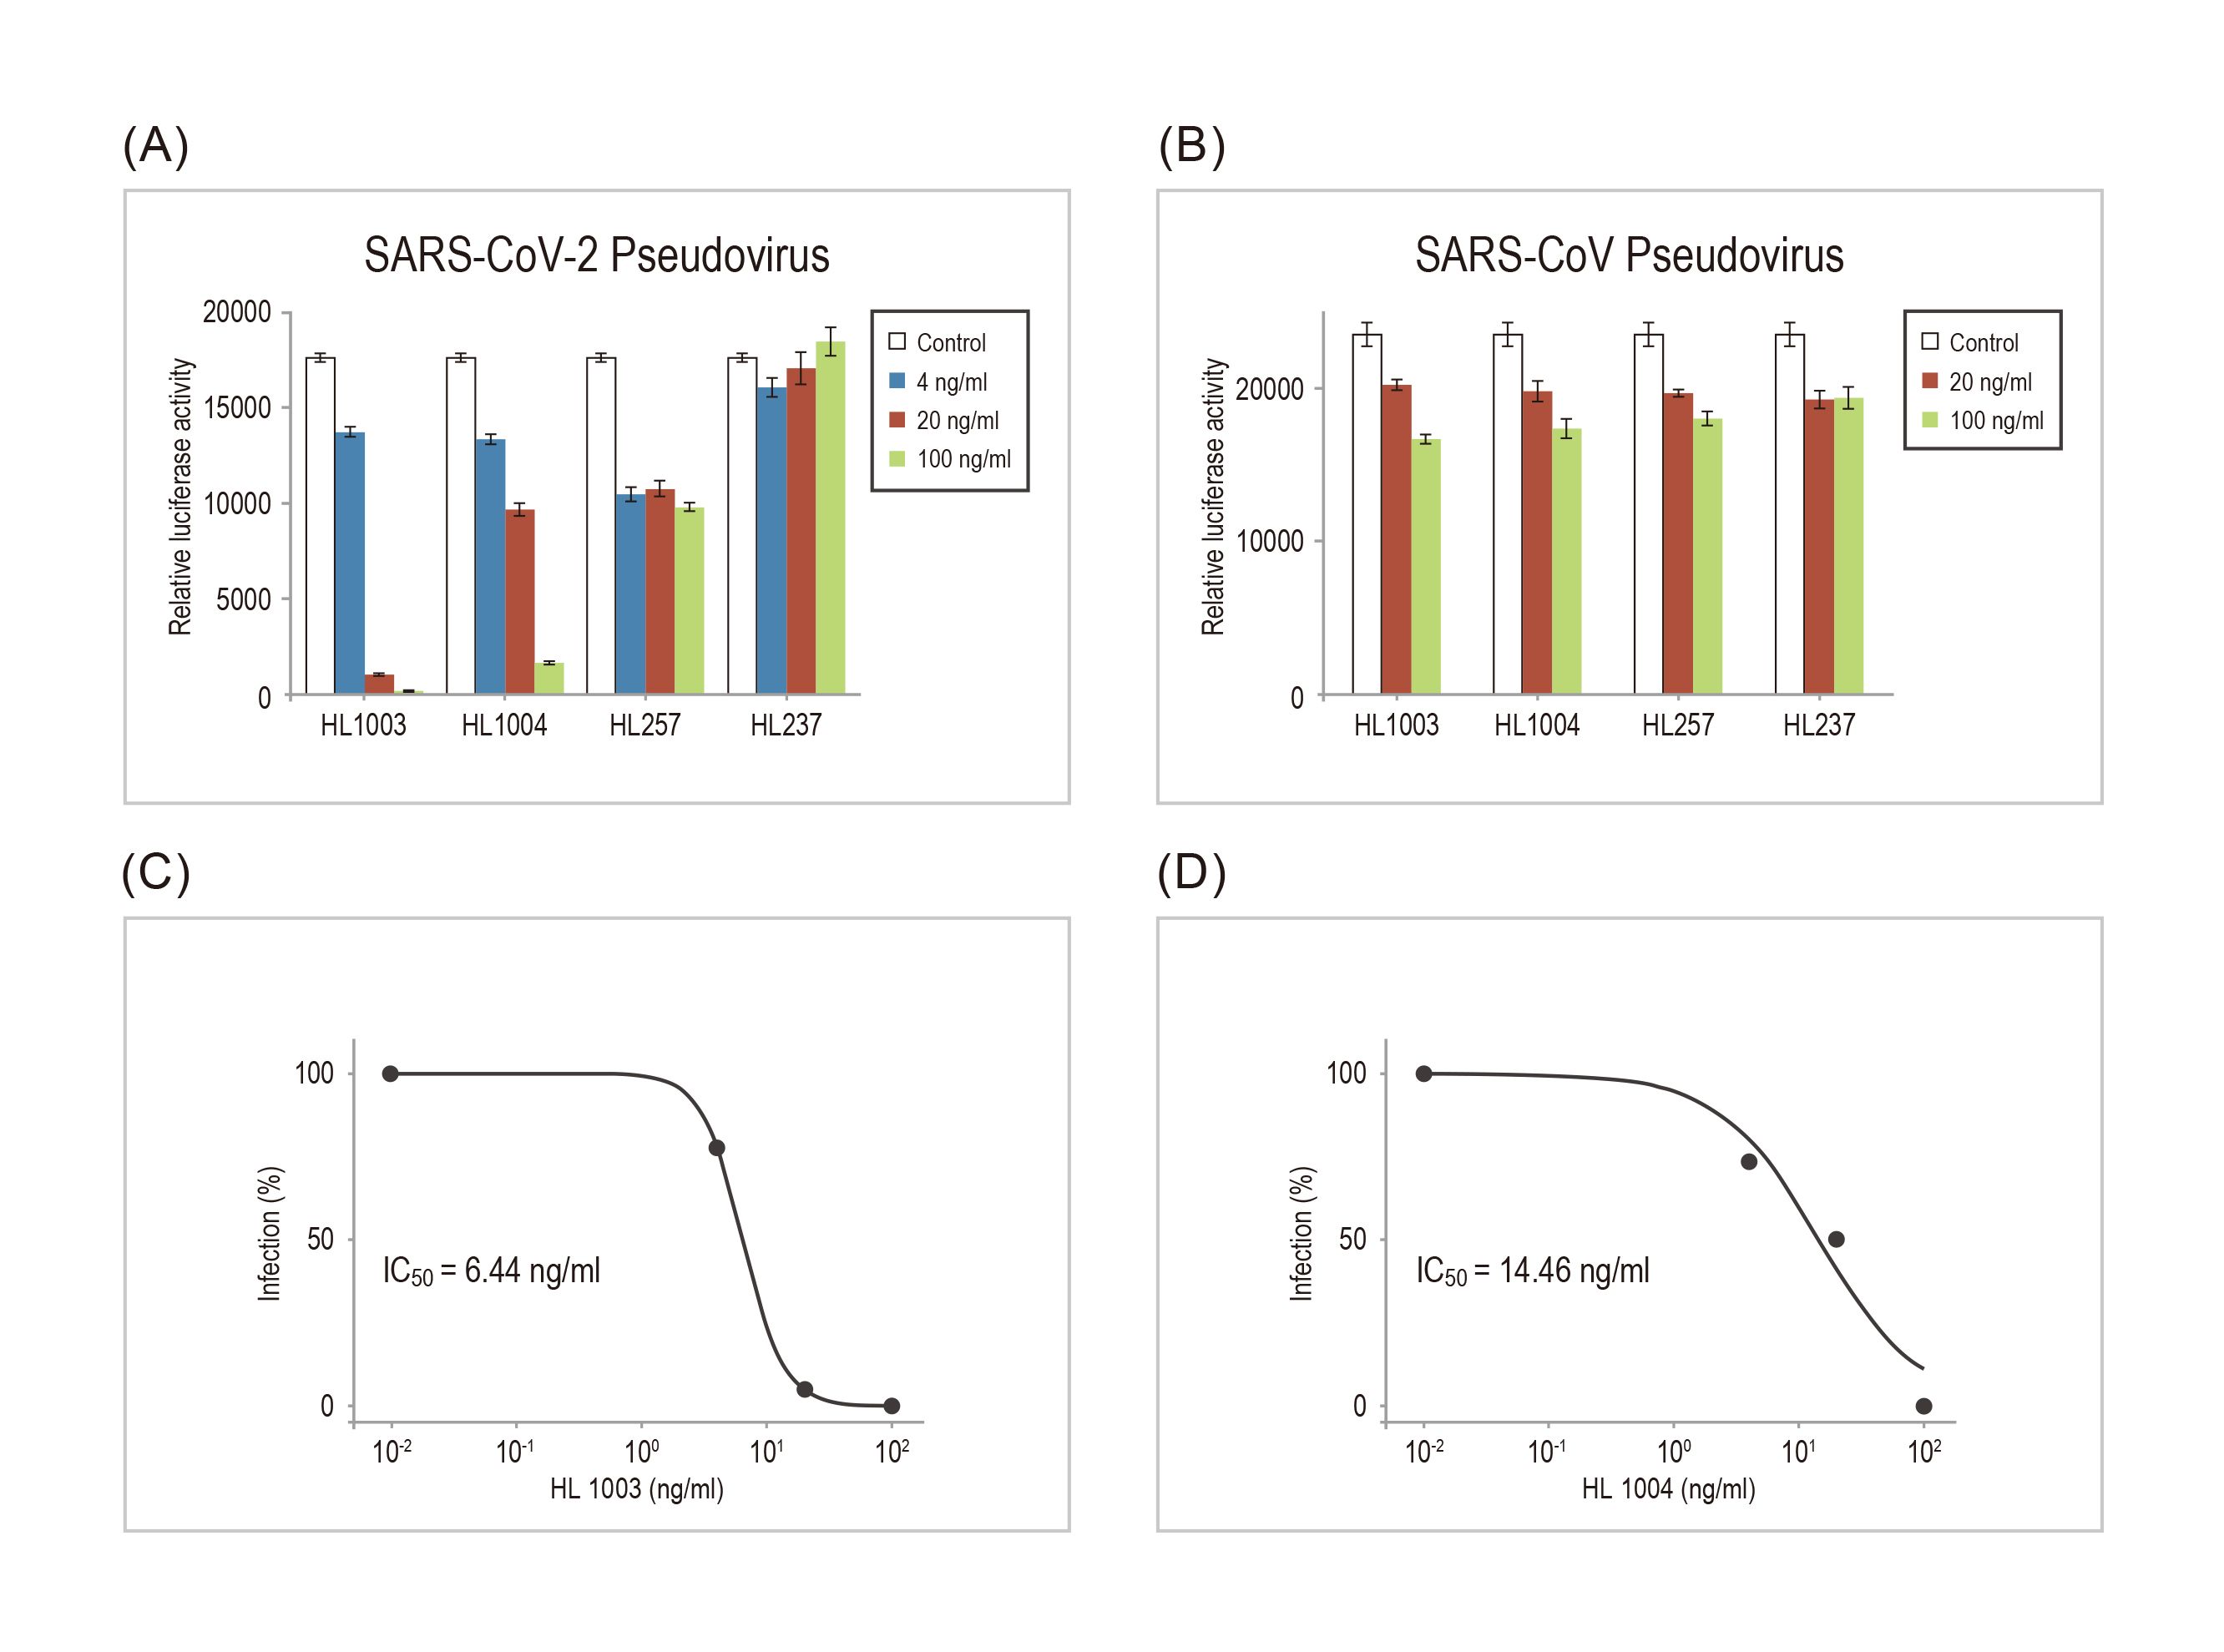 SARS-CoV-2 (COVID-19) Spike RBD antibody [HL1004] (GTX635793) effectively neutralizes SARS-CoV-2, but not SARS-CoV, pseudovirus entry into human cells.